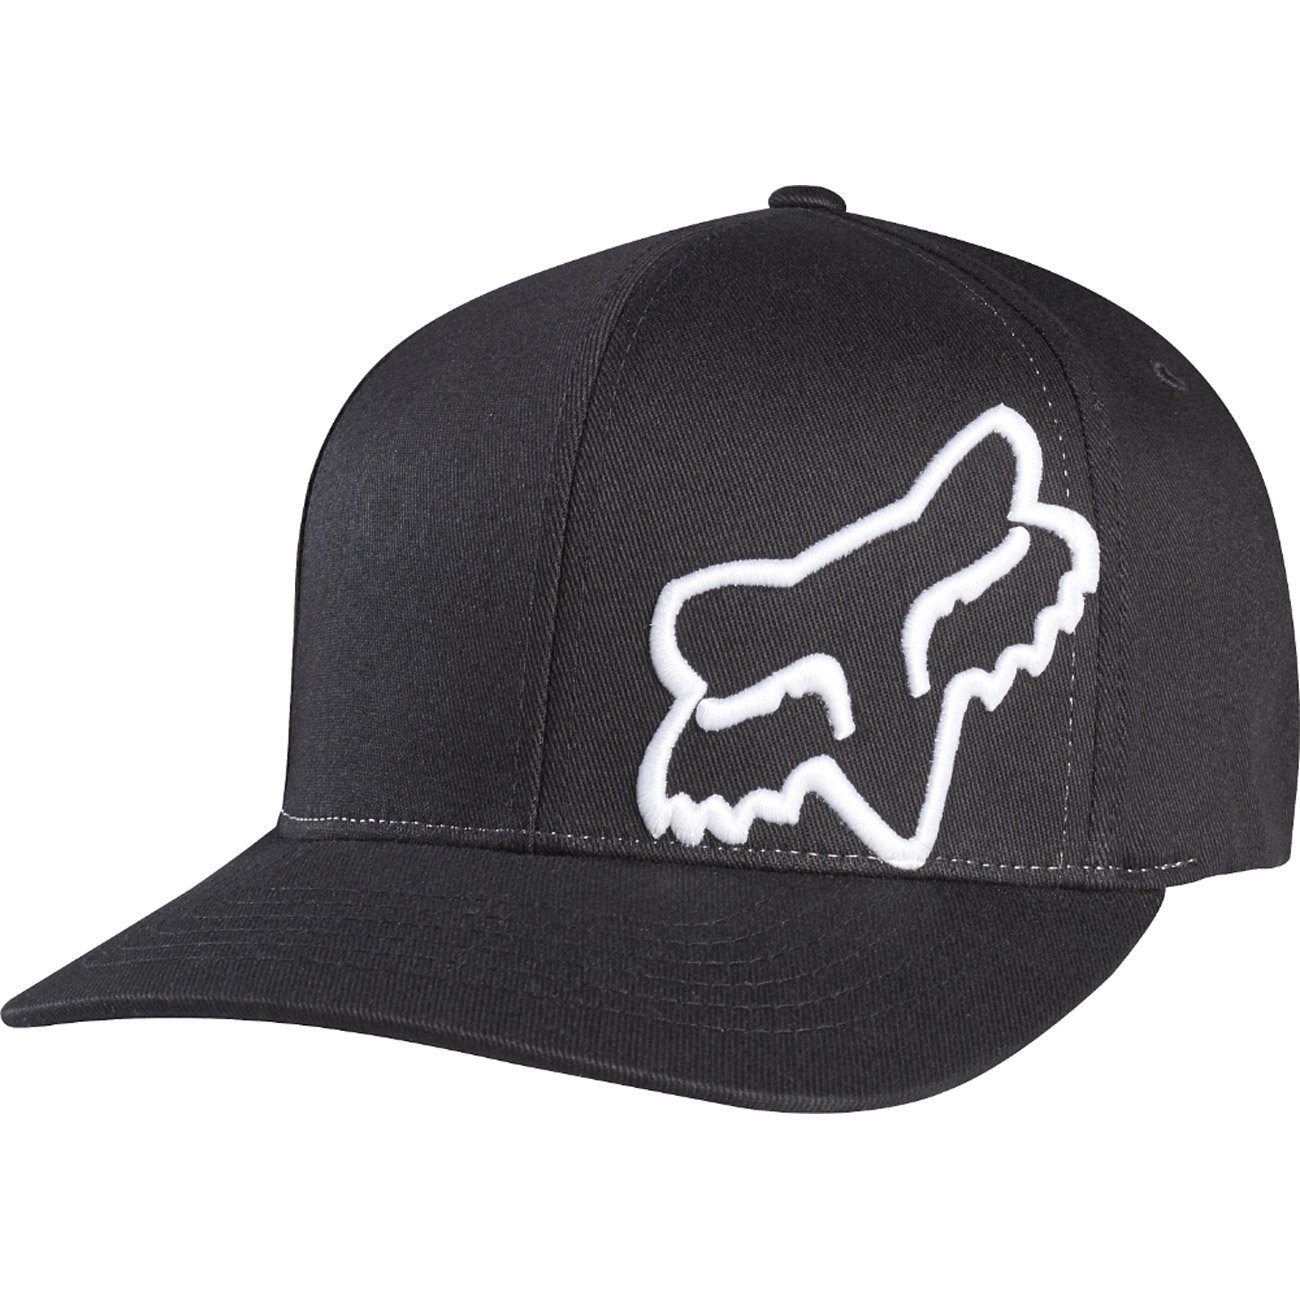 018-blk/wht Hat Flex 45 Fox Flexfit Baseball Cap